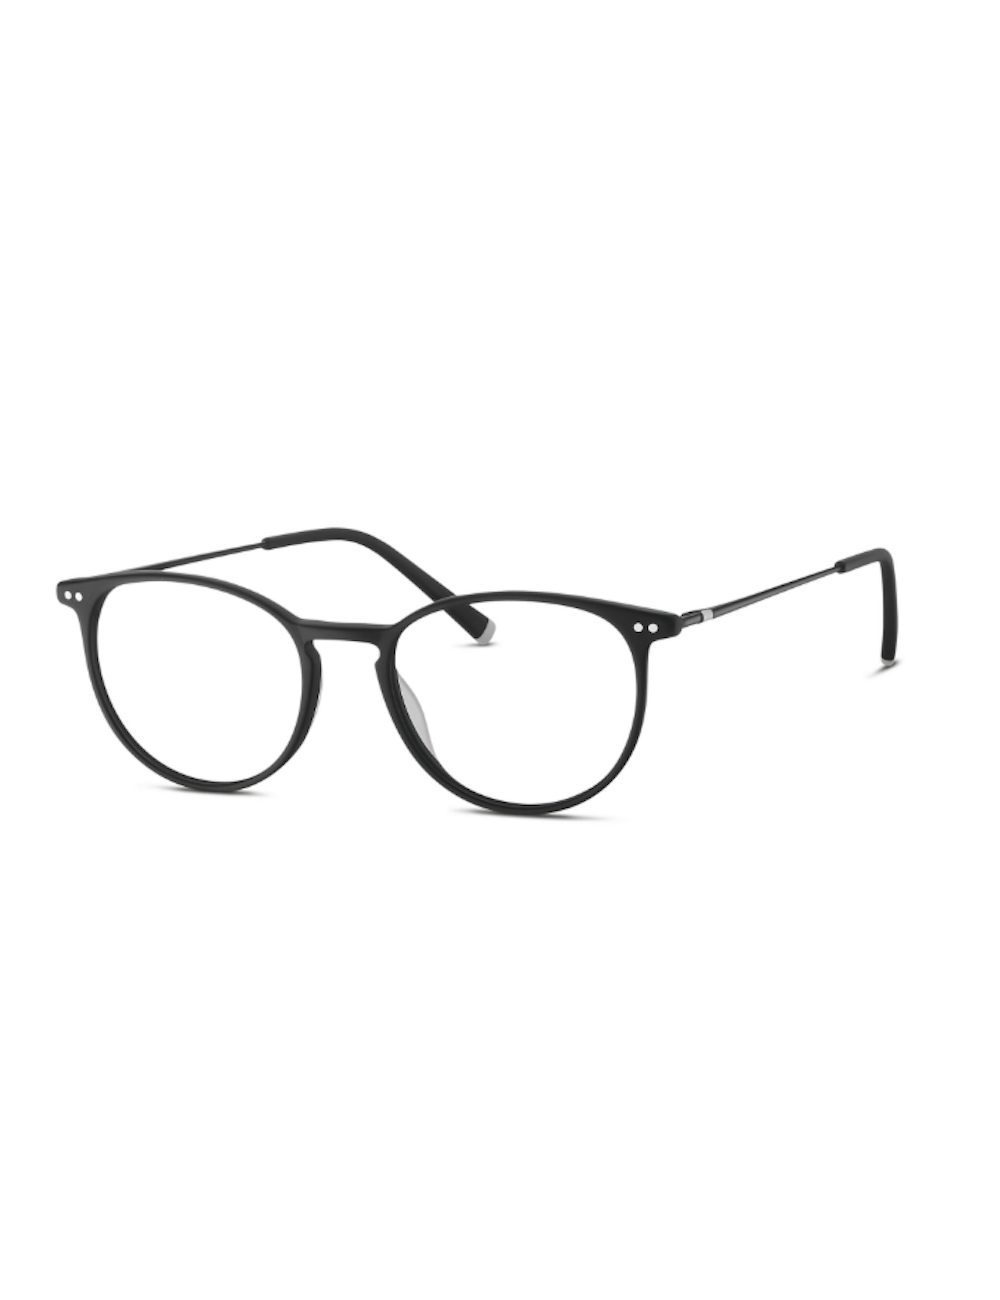 Humphrey's eyewear 581066 10 occhiali da vista rotondi - Ottica Mauro